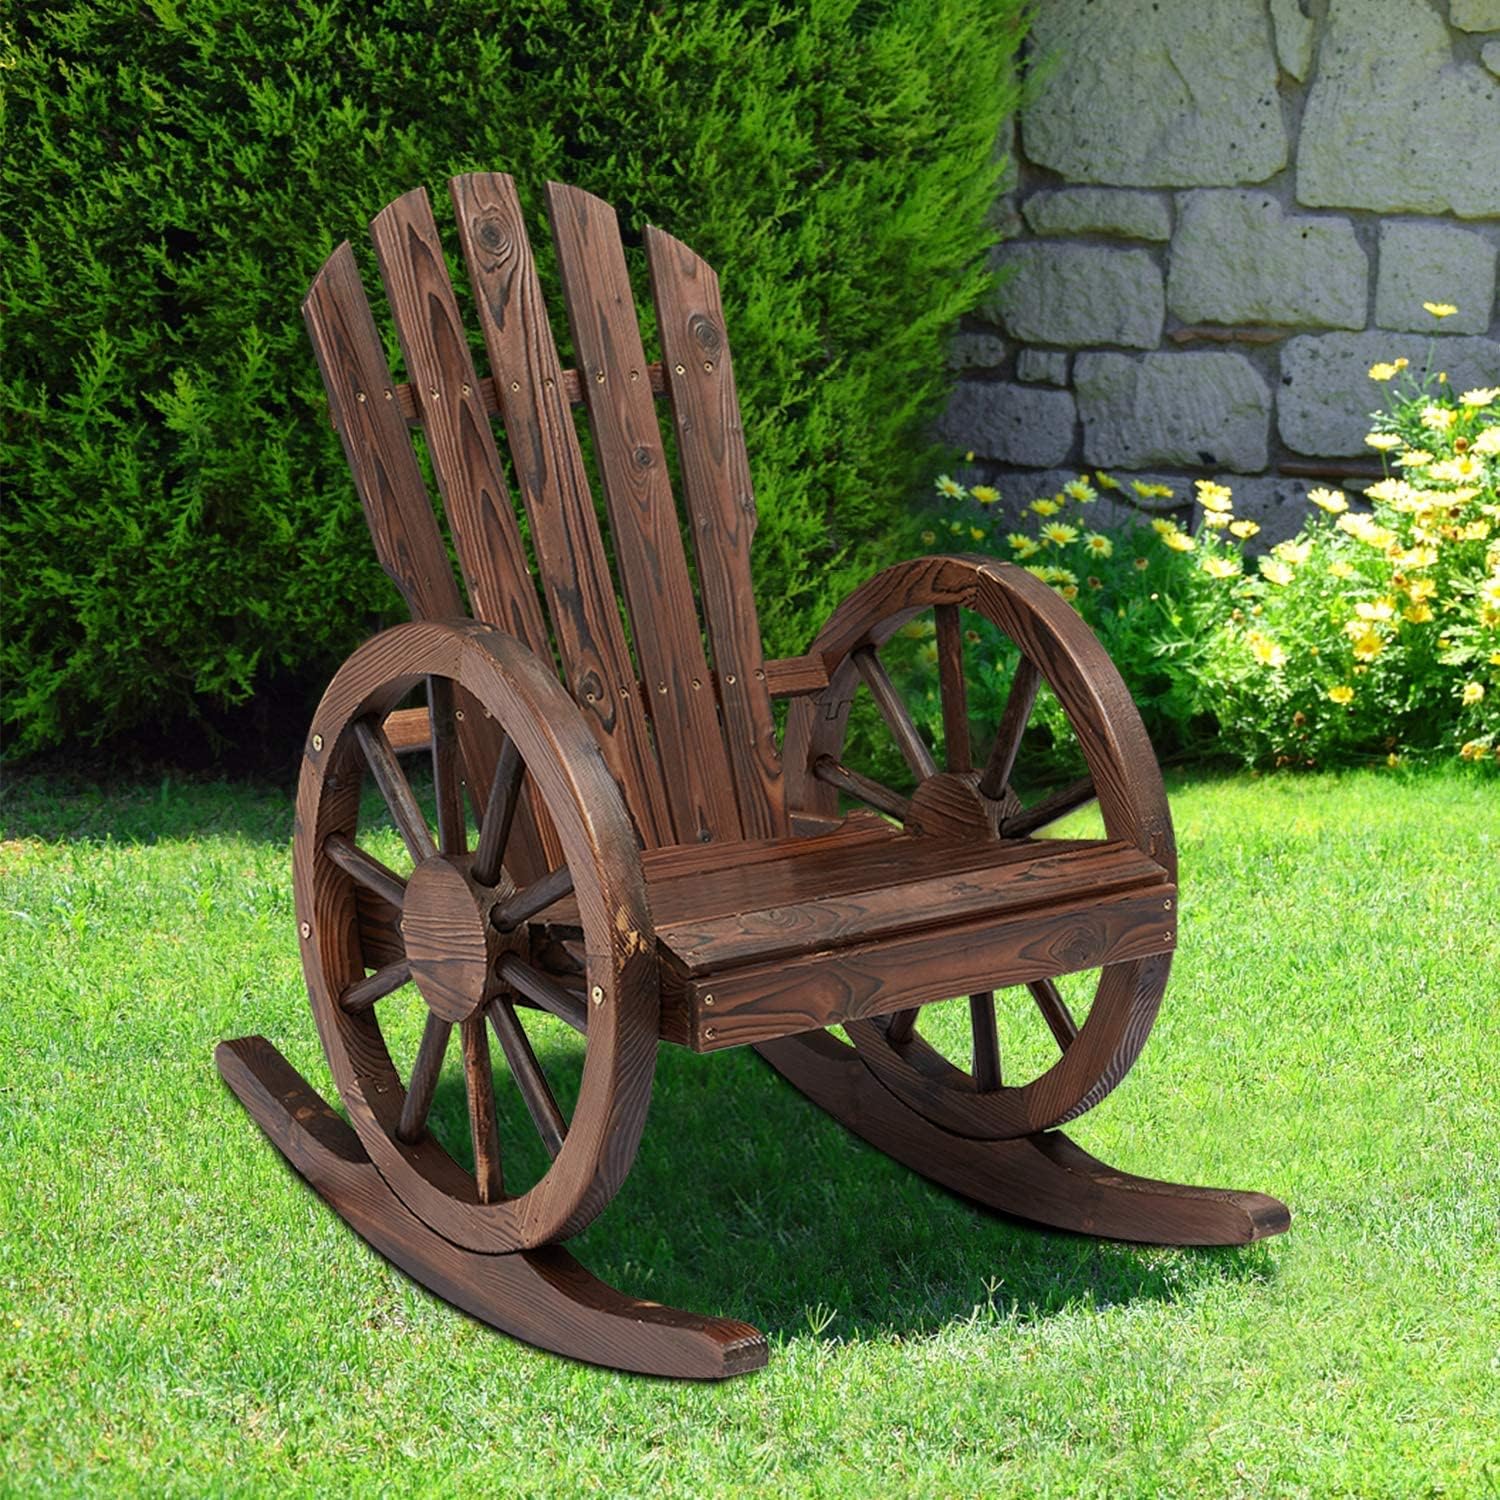 Kinbor Wagon Wheel Wood Rocking Chair Outdoor Furniture Patio Chairs Armrest Rocker - image 3 of 7